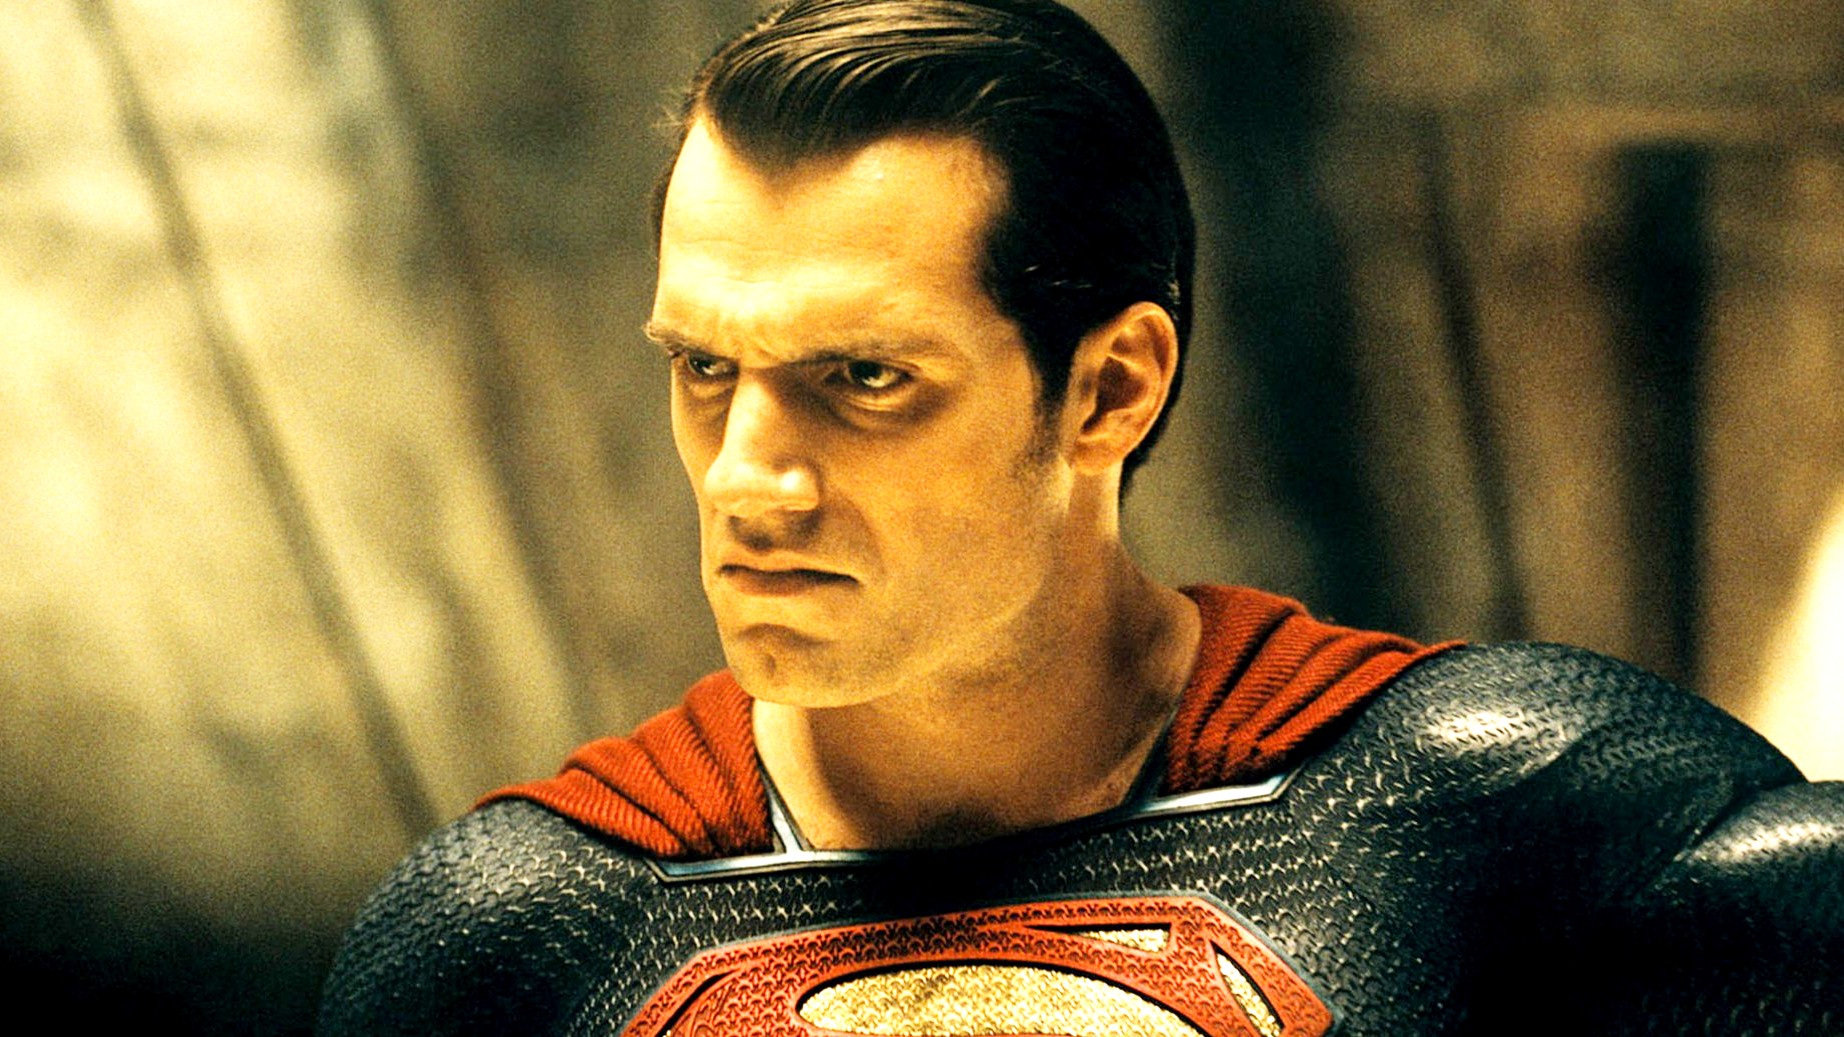 Amy Adams Breaks Silence on Henry Cavill's Superman Return